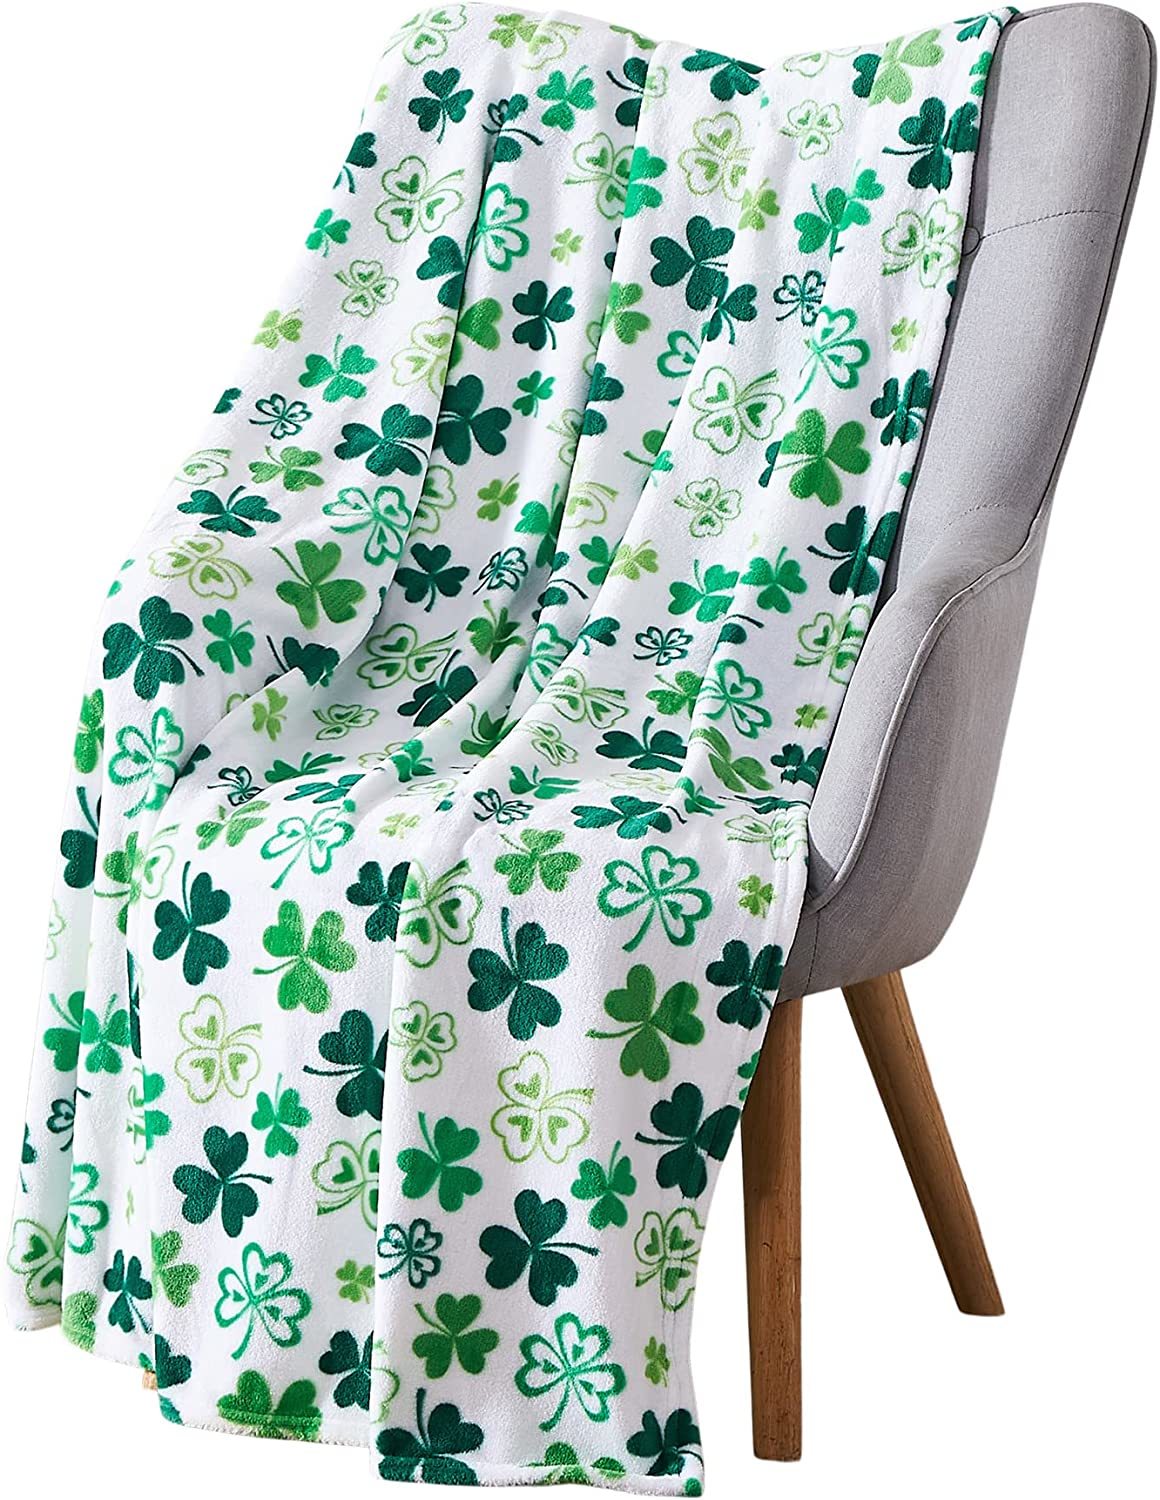 Primary image for St. Patrick's Day Soft Throw Blanket: Greens of Ireland, Shamrock Shenanigans